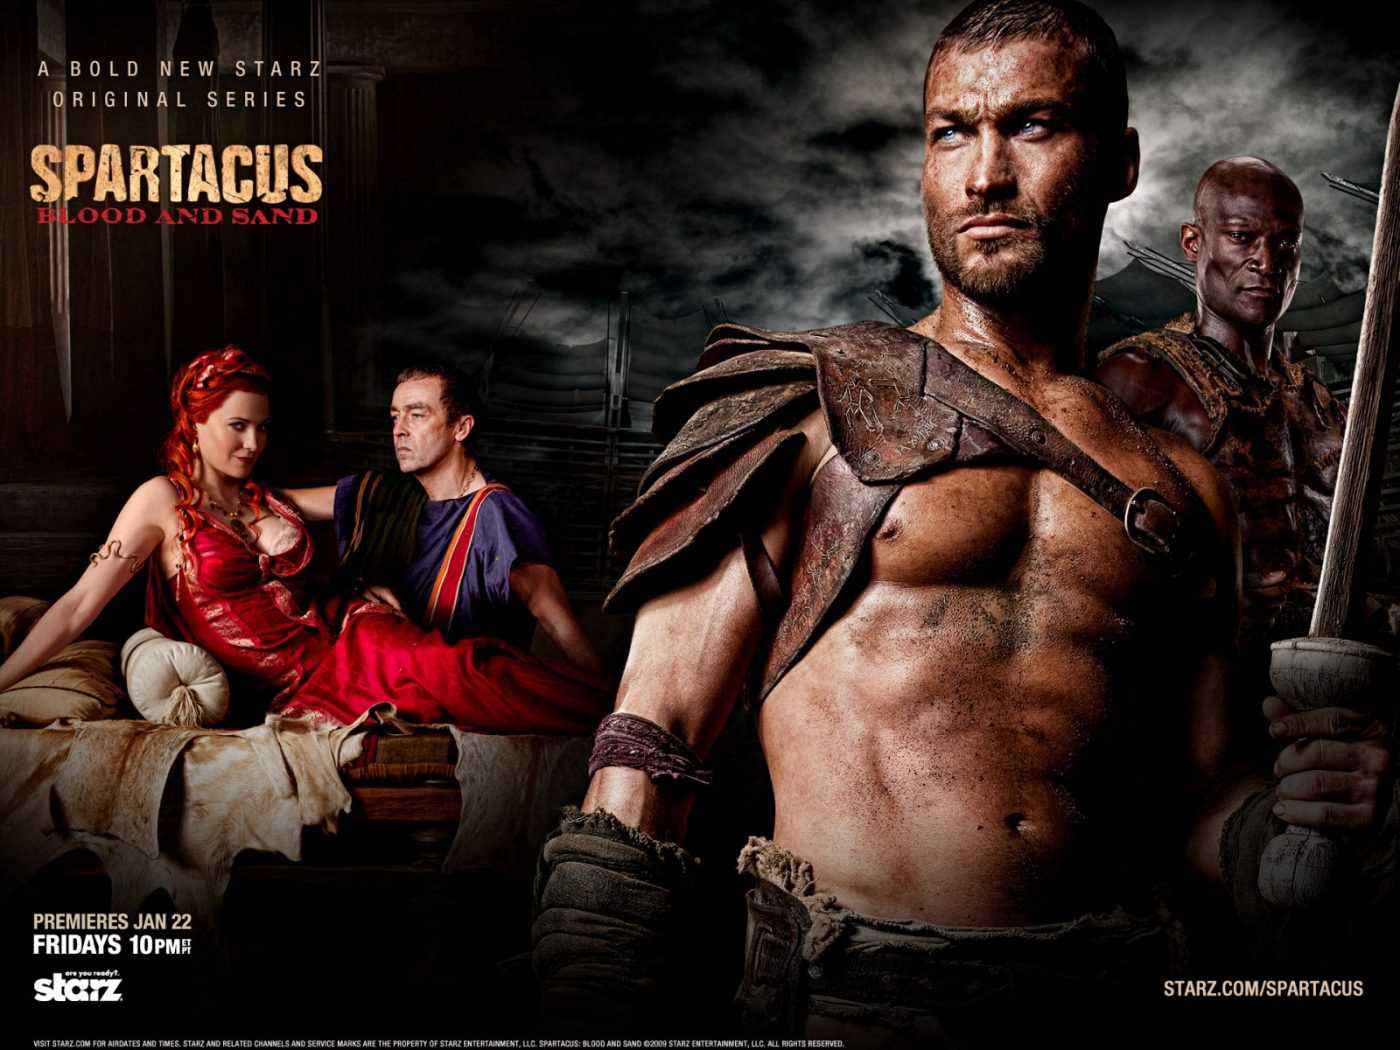 Spartacus: Máu và cát (Phần 1) - Spartacus (Season 1)